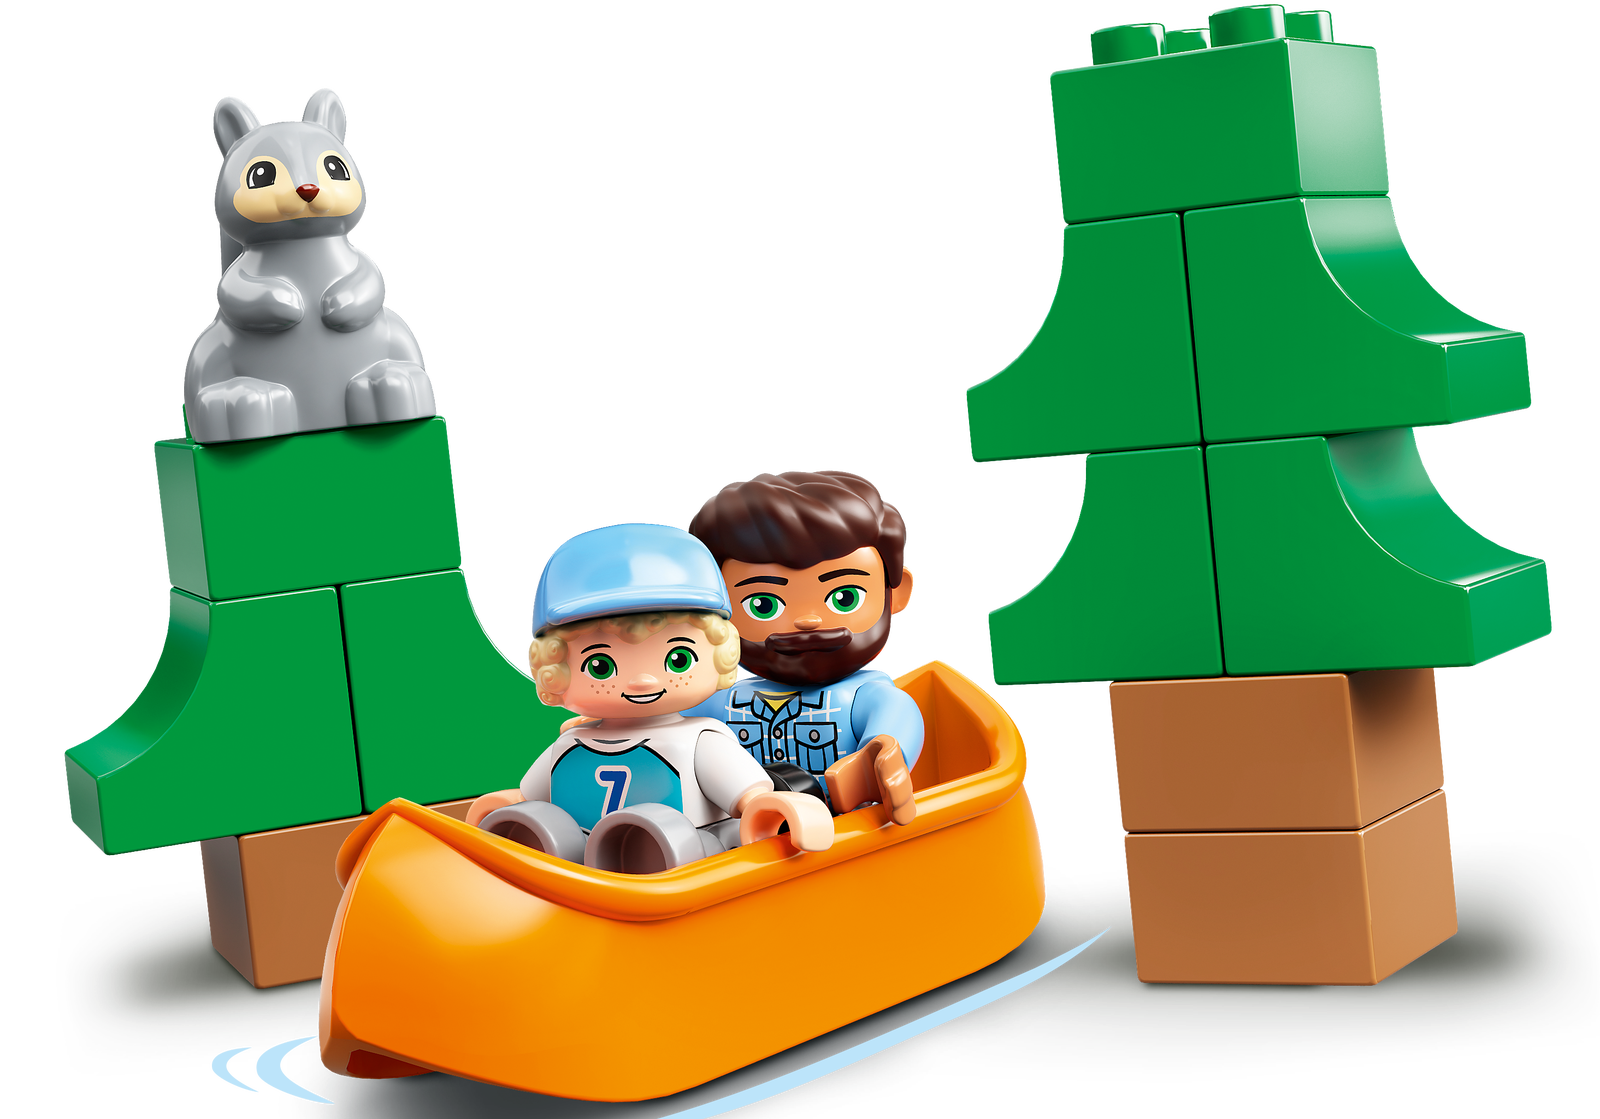 Lego Duplo Family Camping Van Adventure 10946